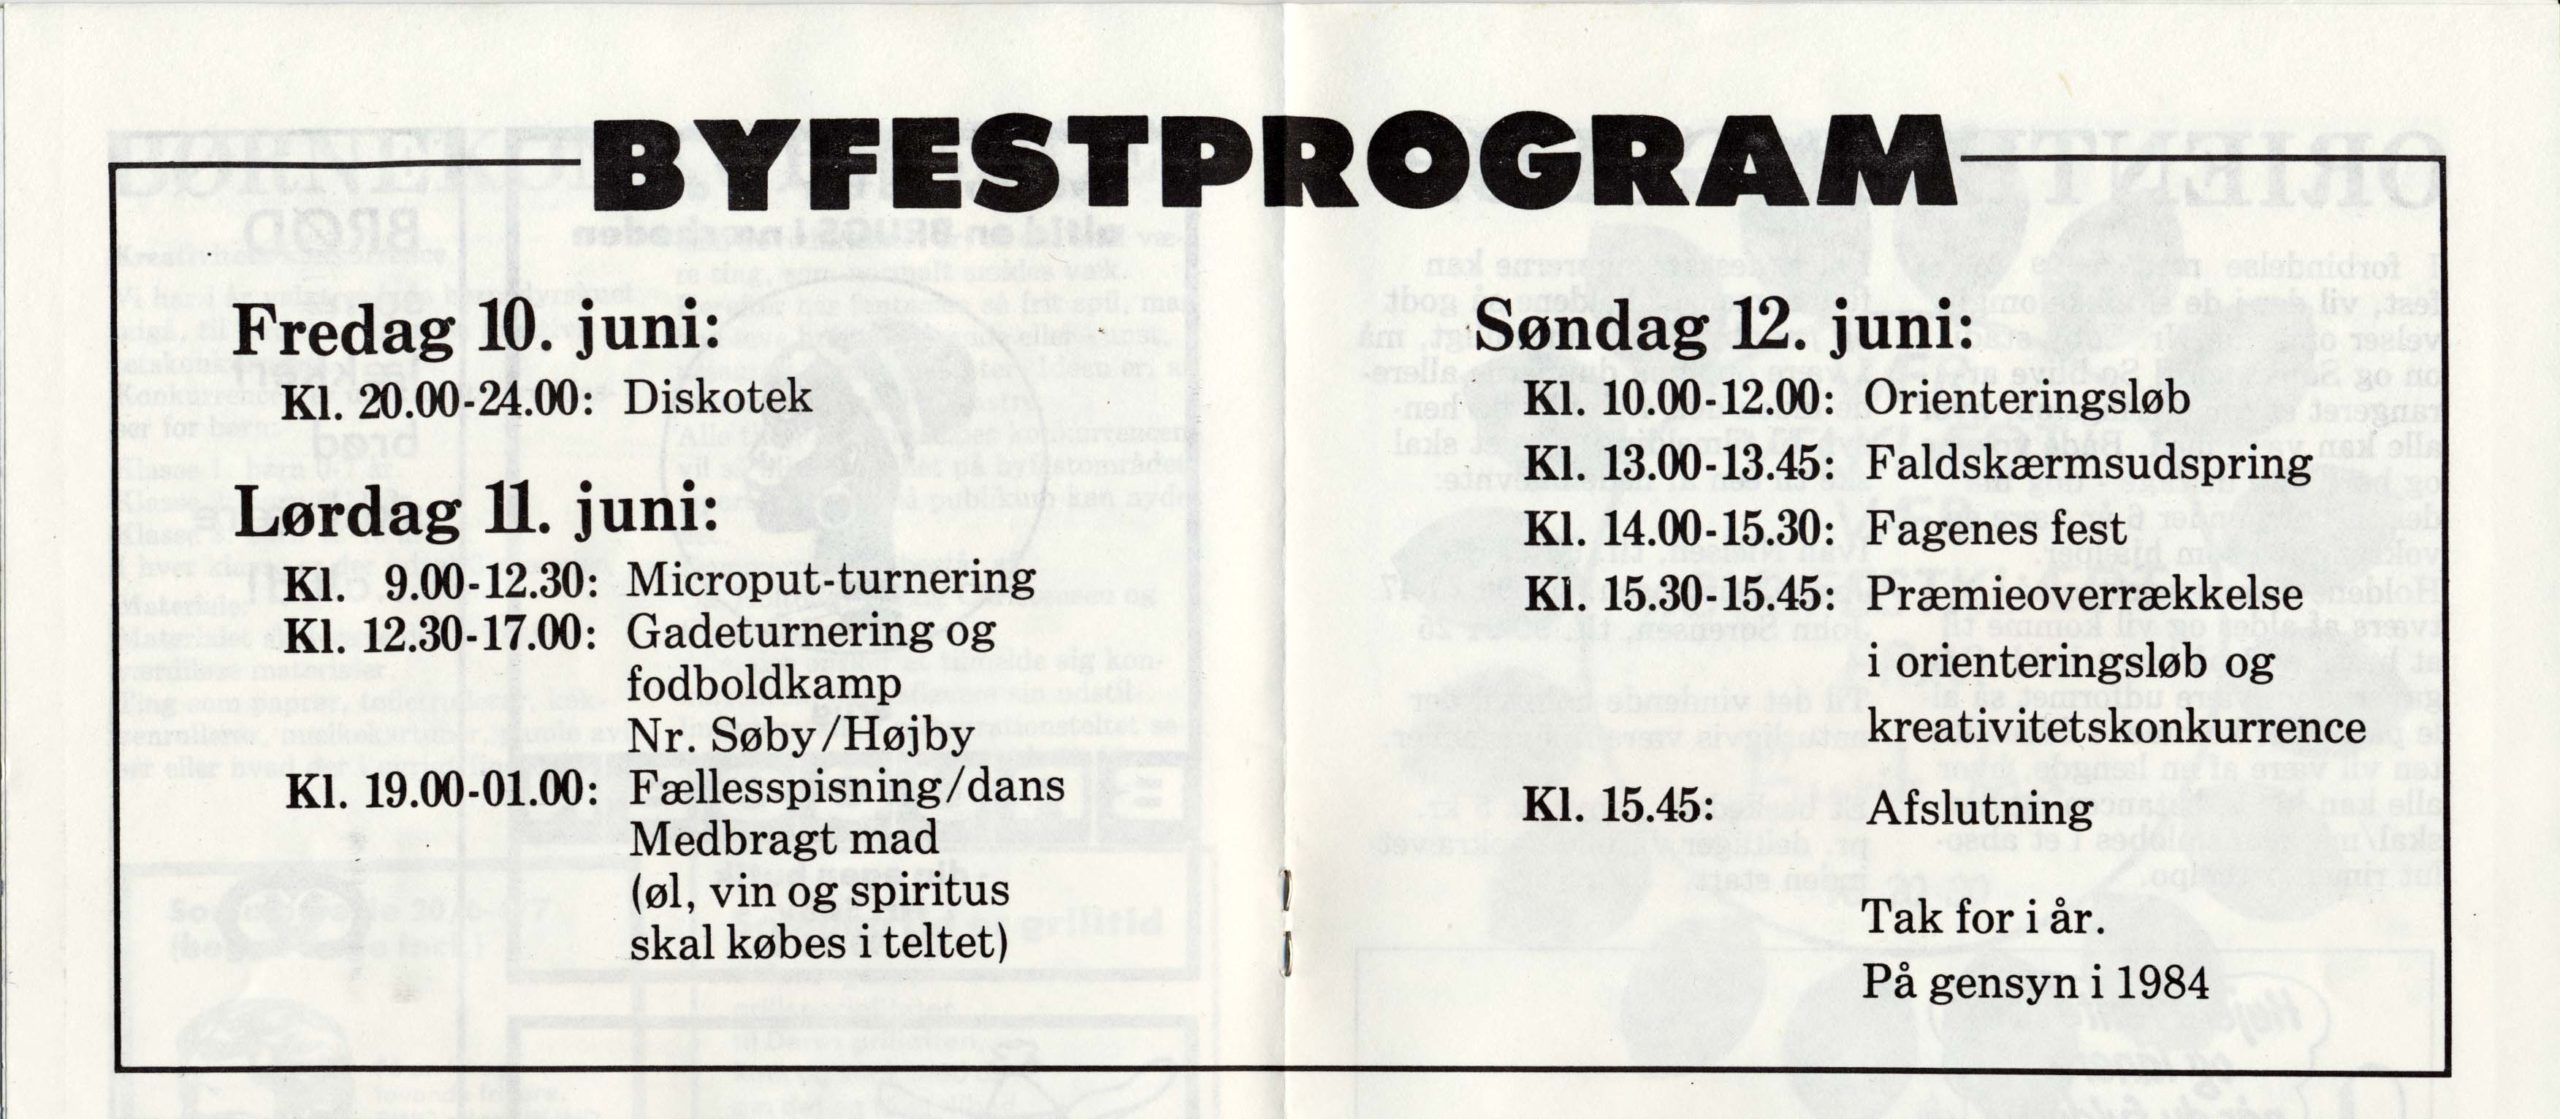 Program 1983